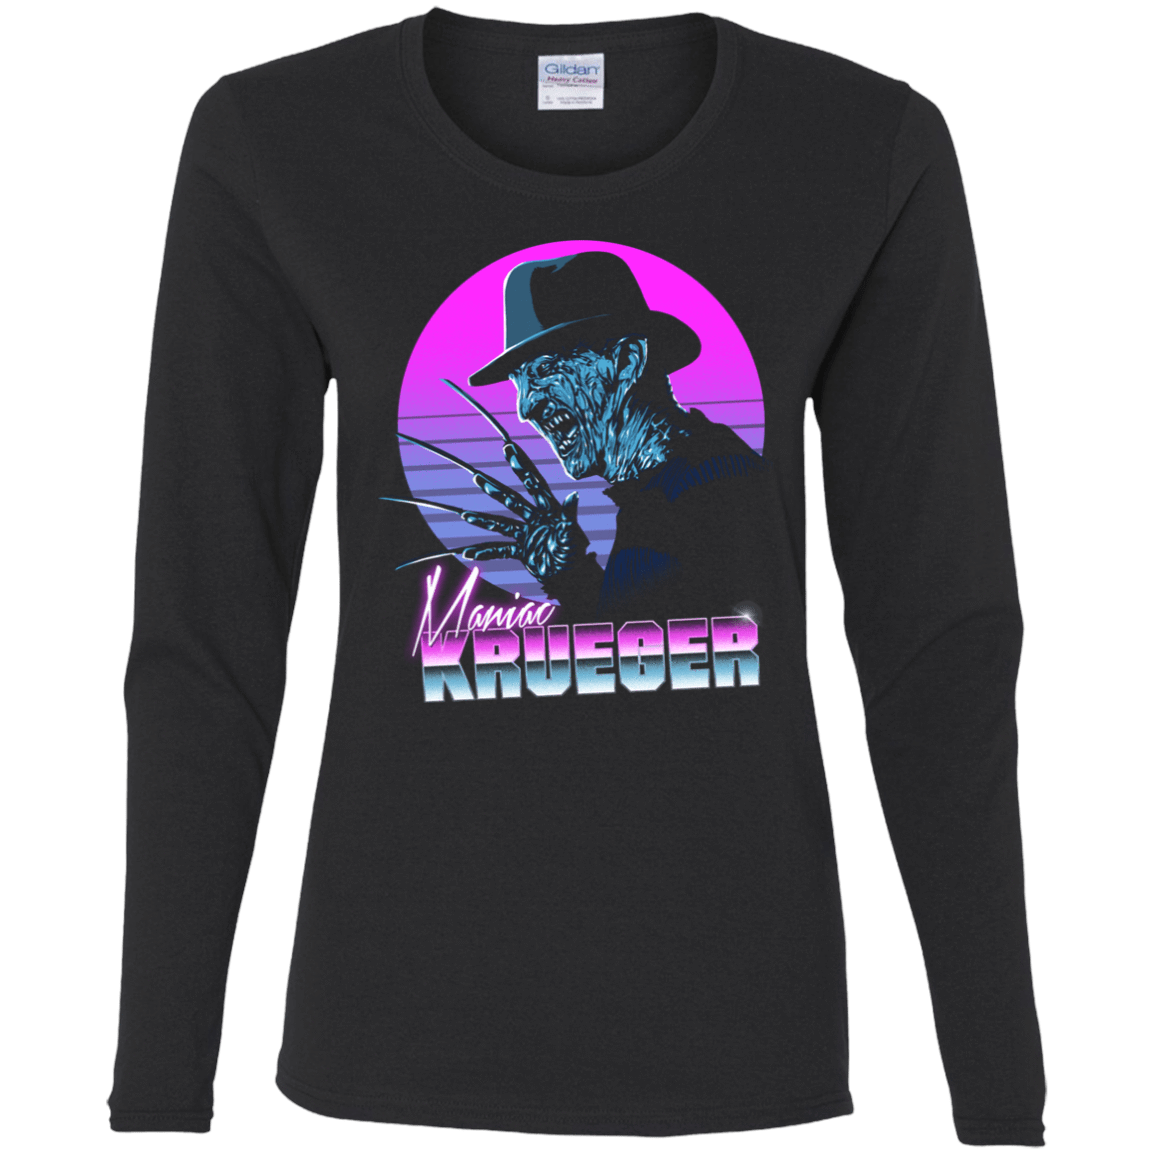 T-Shirts Black / S Retro Krueger Women's Long Sleeve T-Shirt